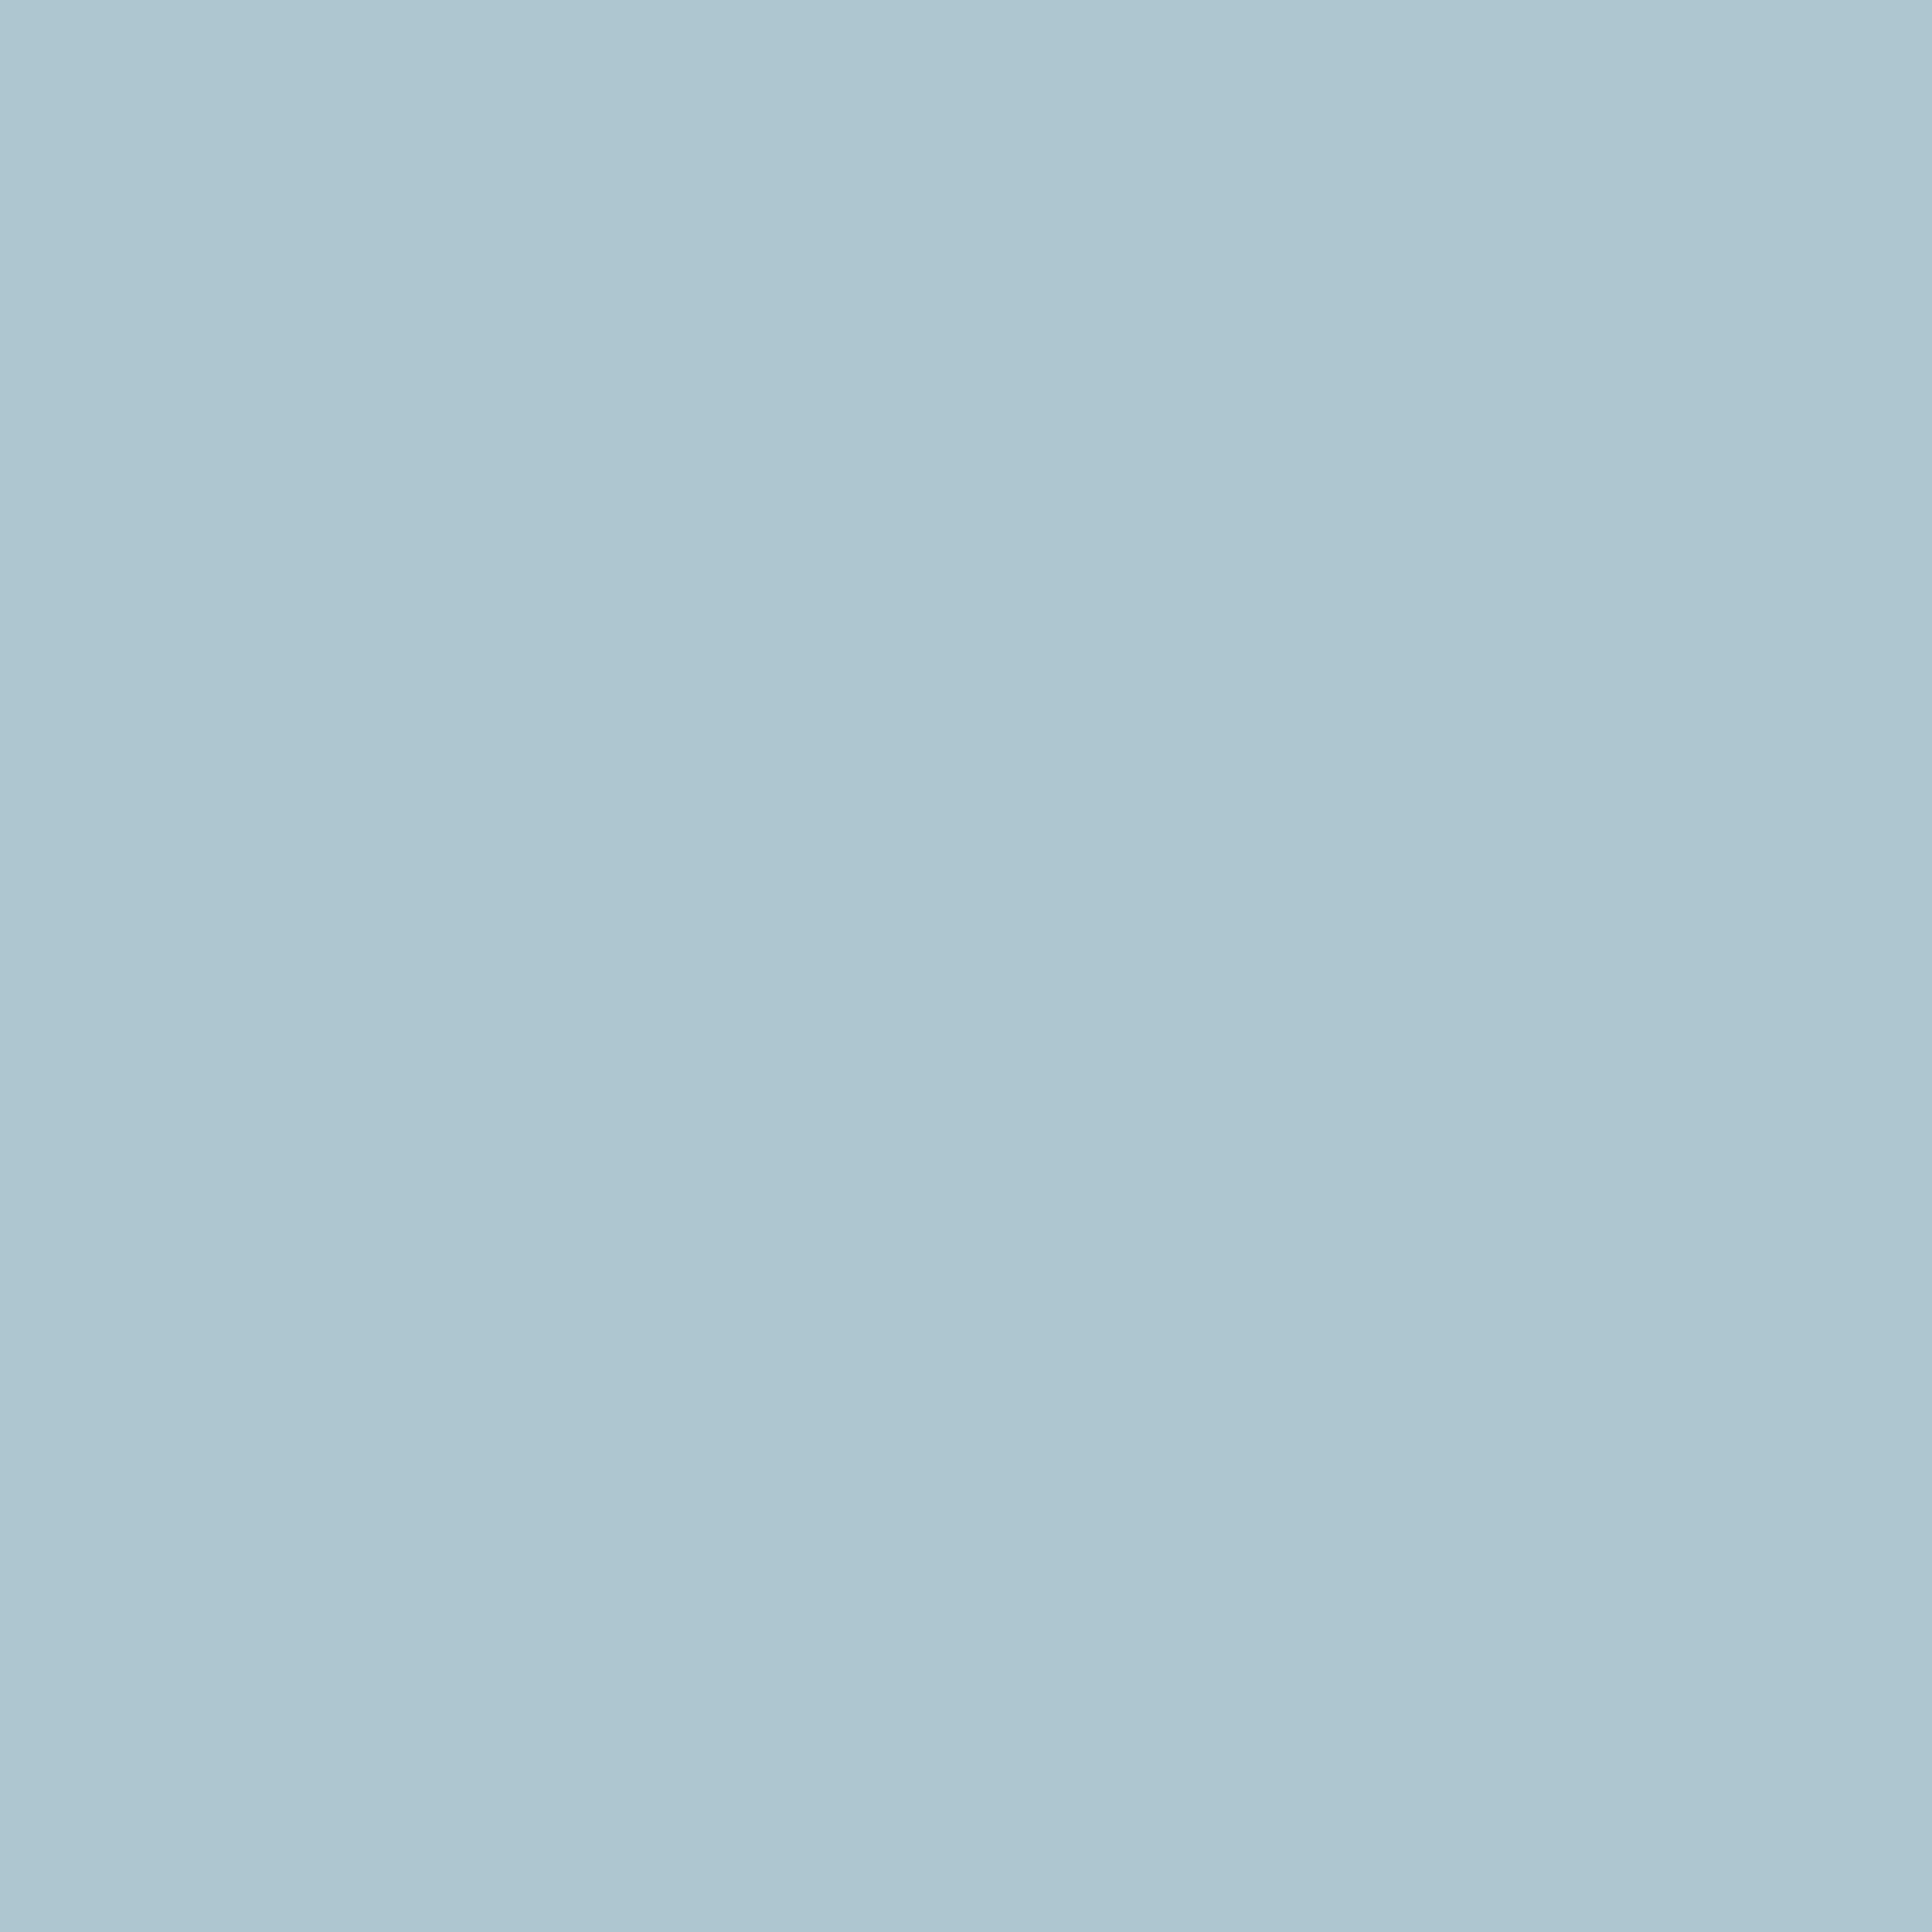 2048x2048 Pastel Blue Solid Color Background